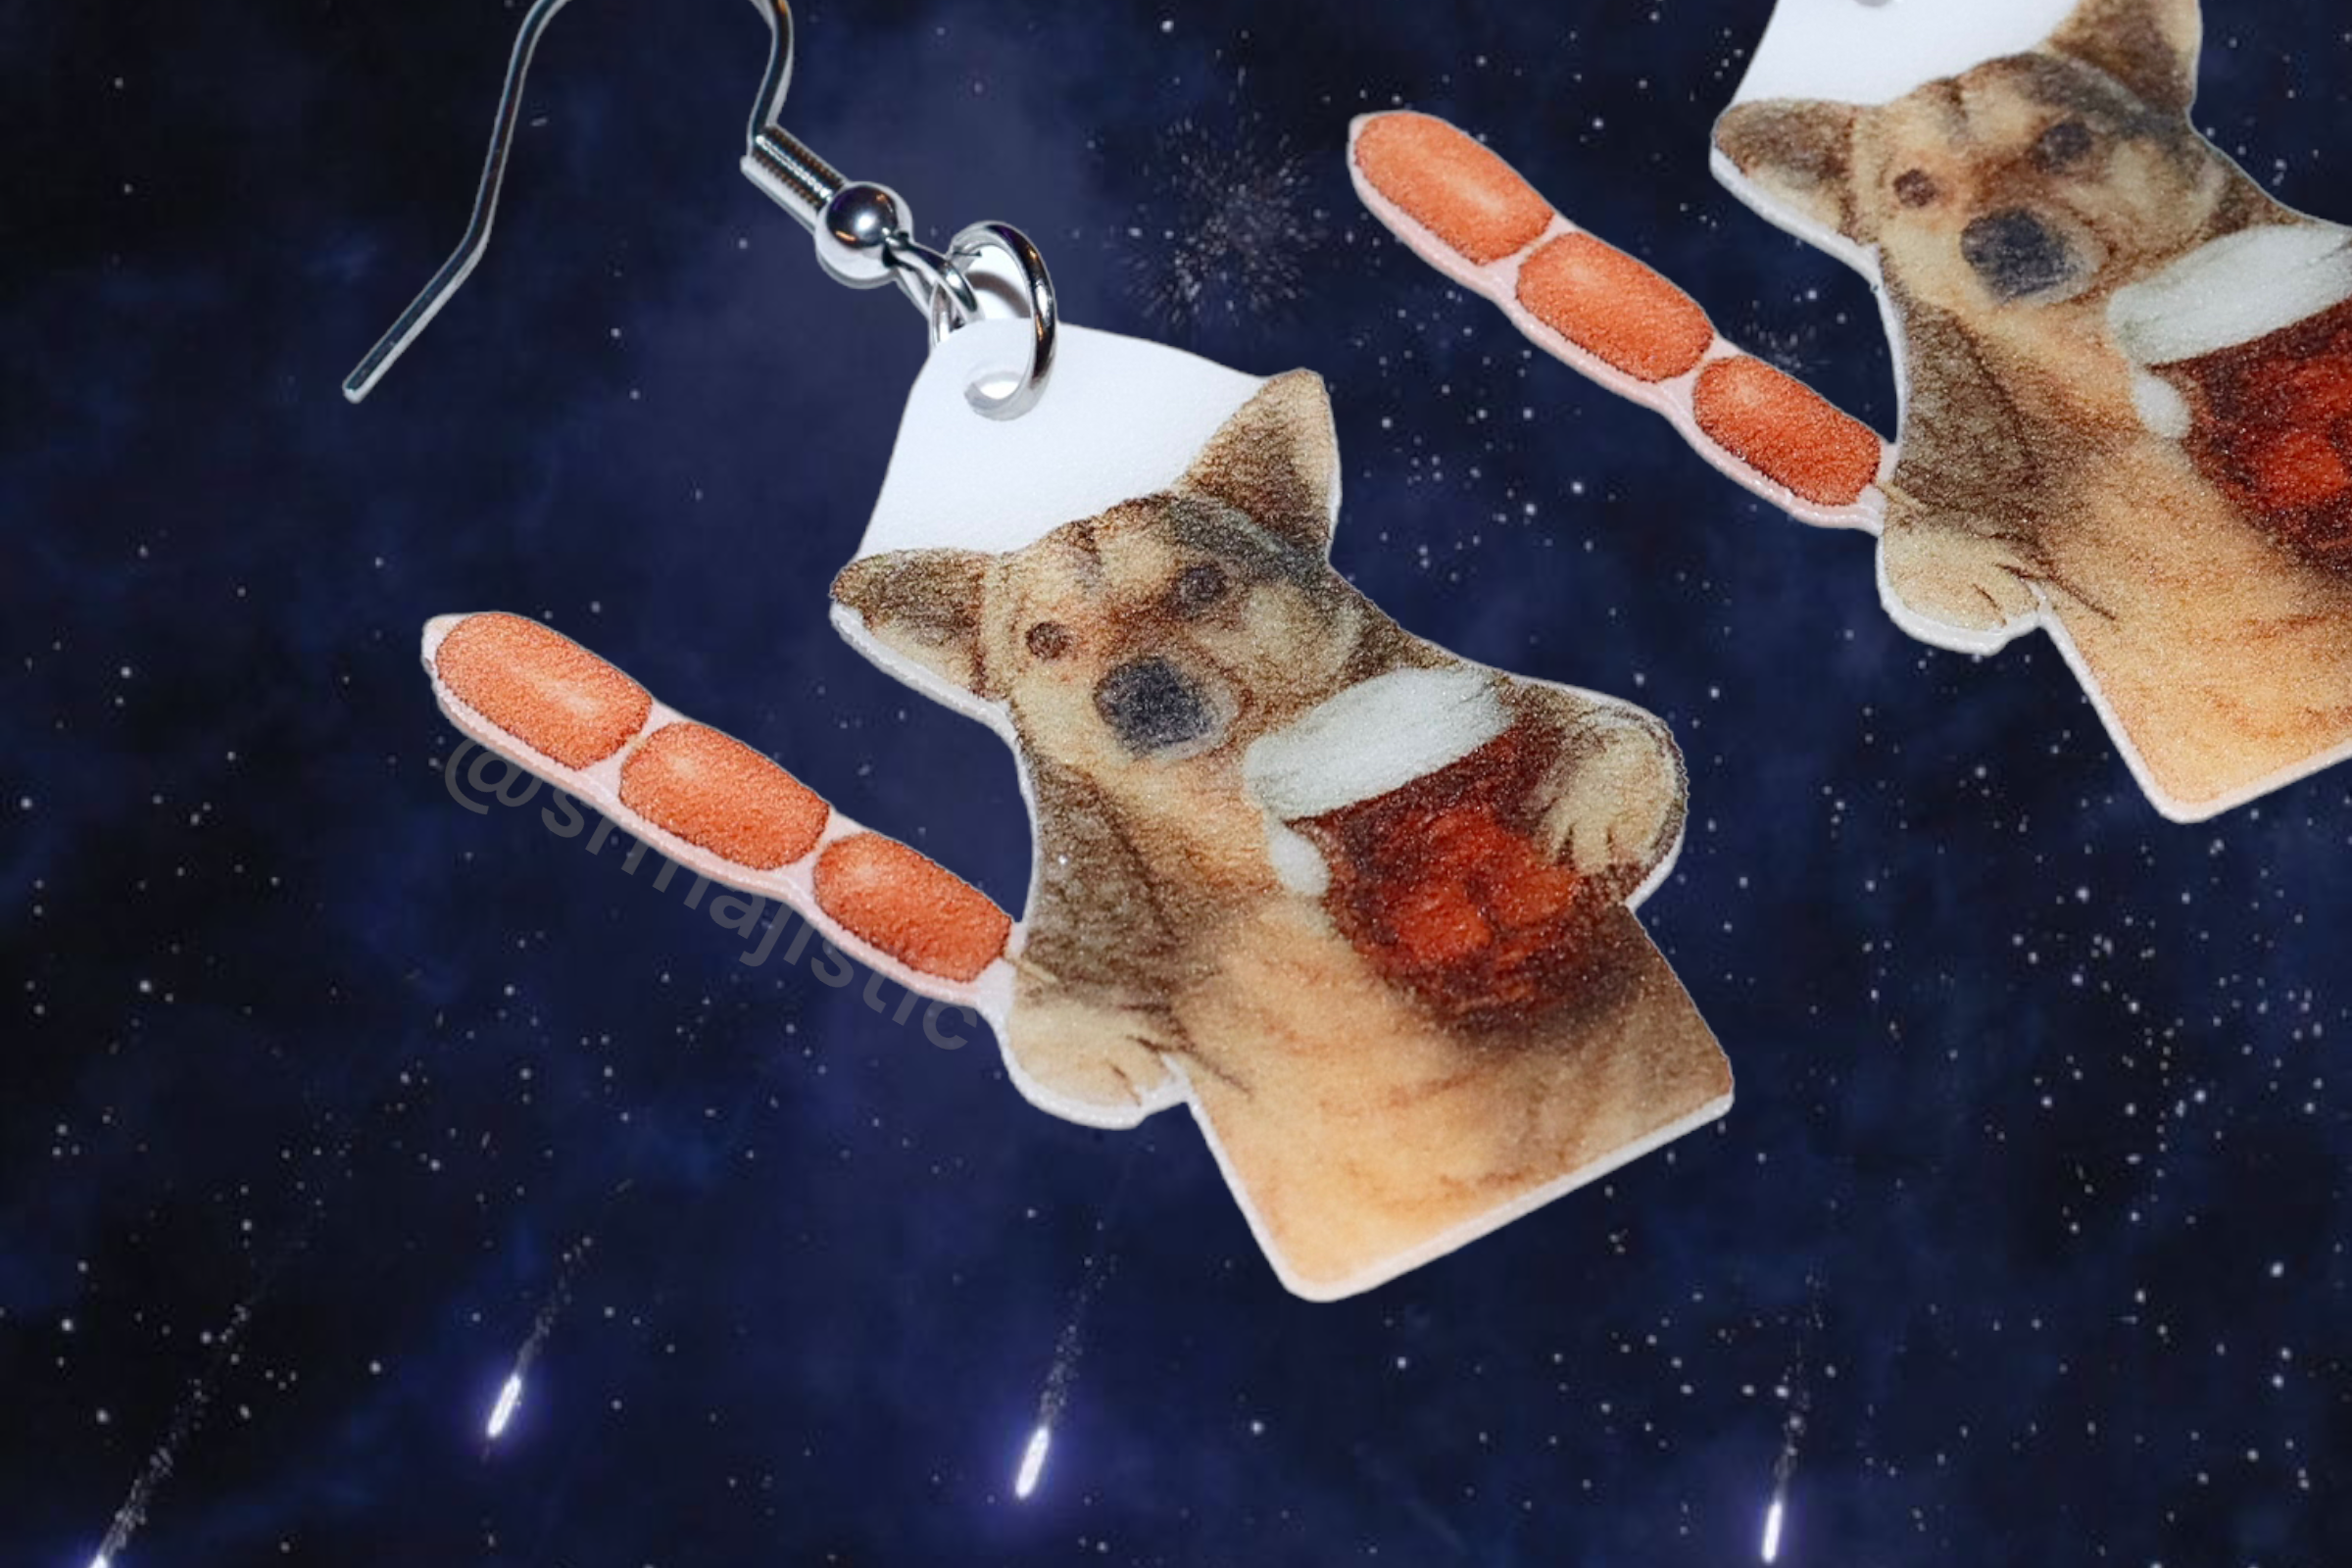 Dog with Corndog and Beer Meme Handmade Earrings!